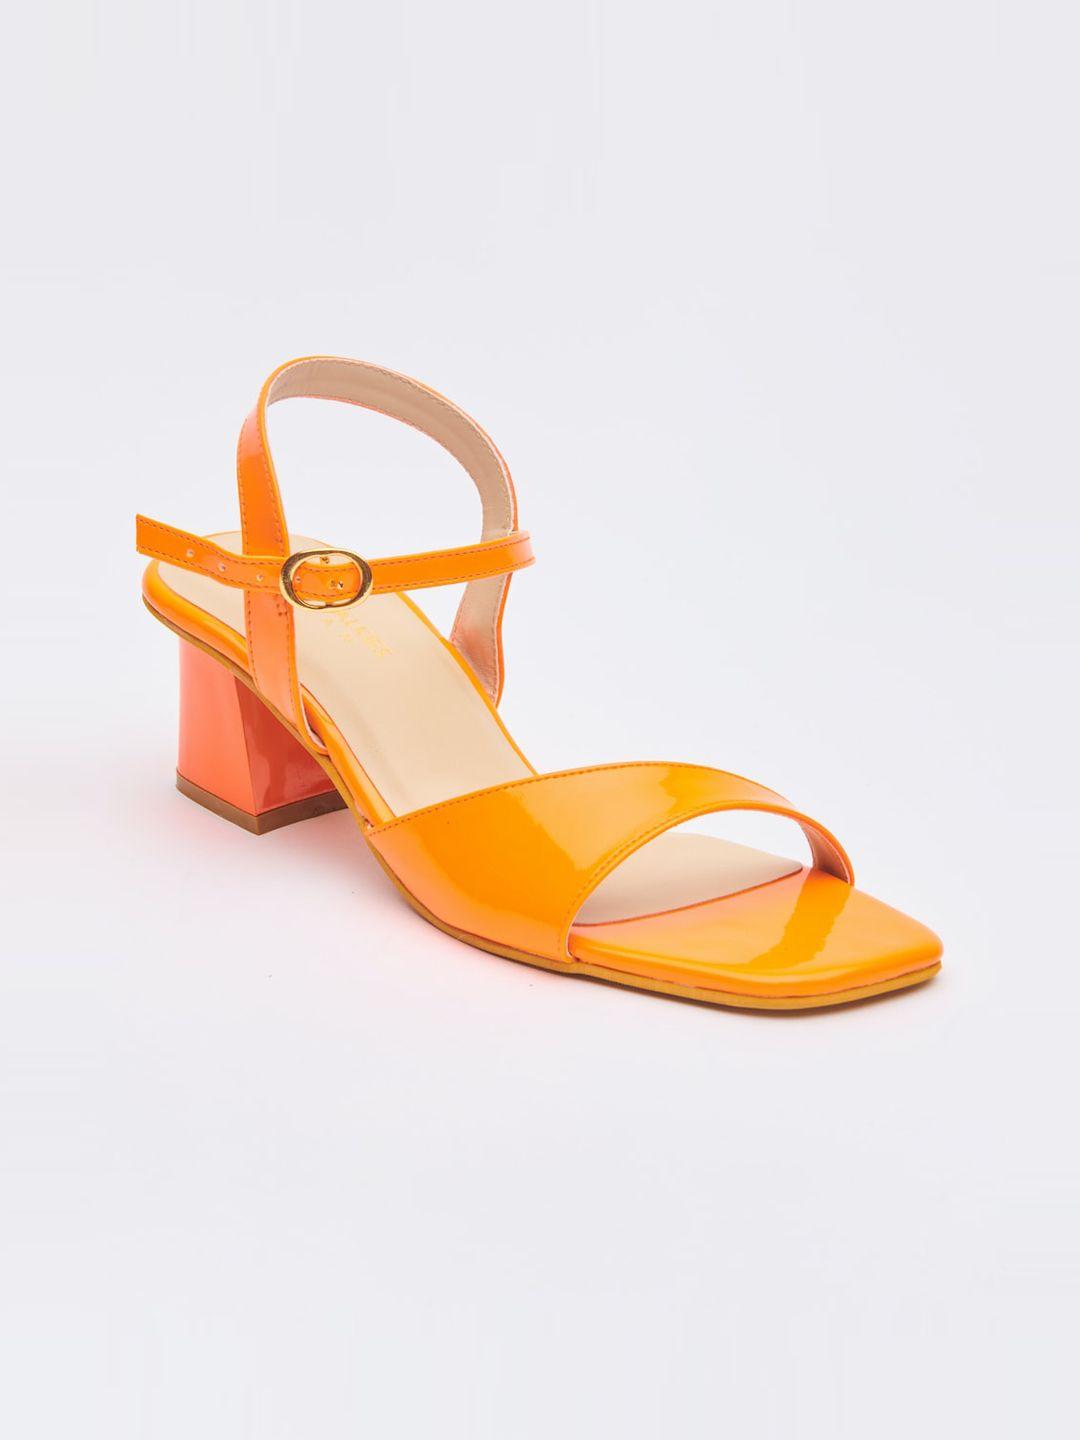 tokyo talkies orange block heels with buckles